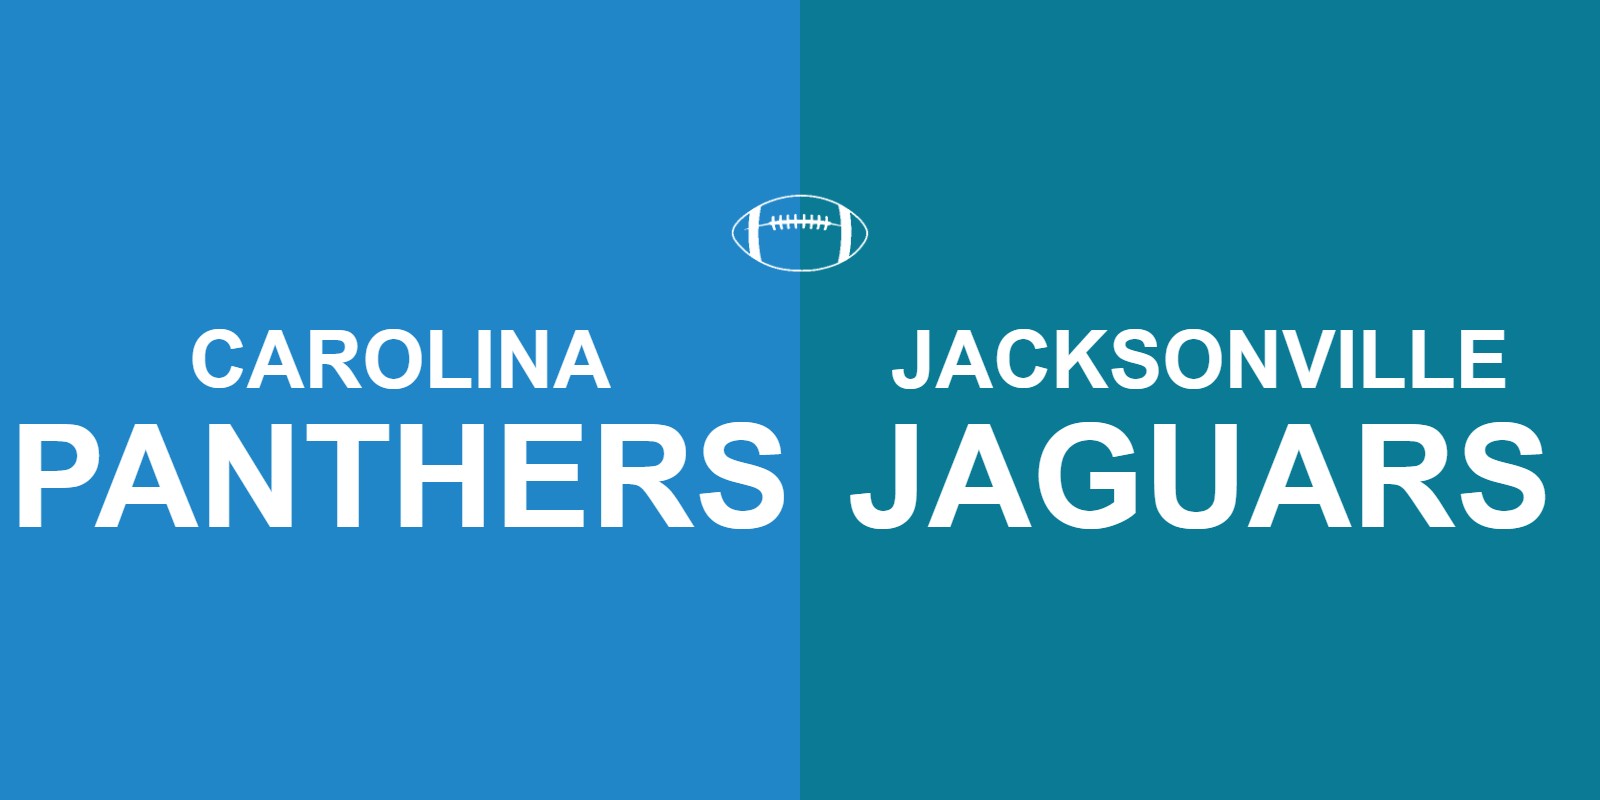 Panthers vs Jaguars